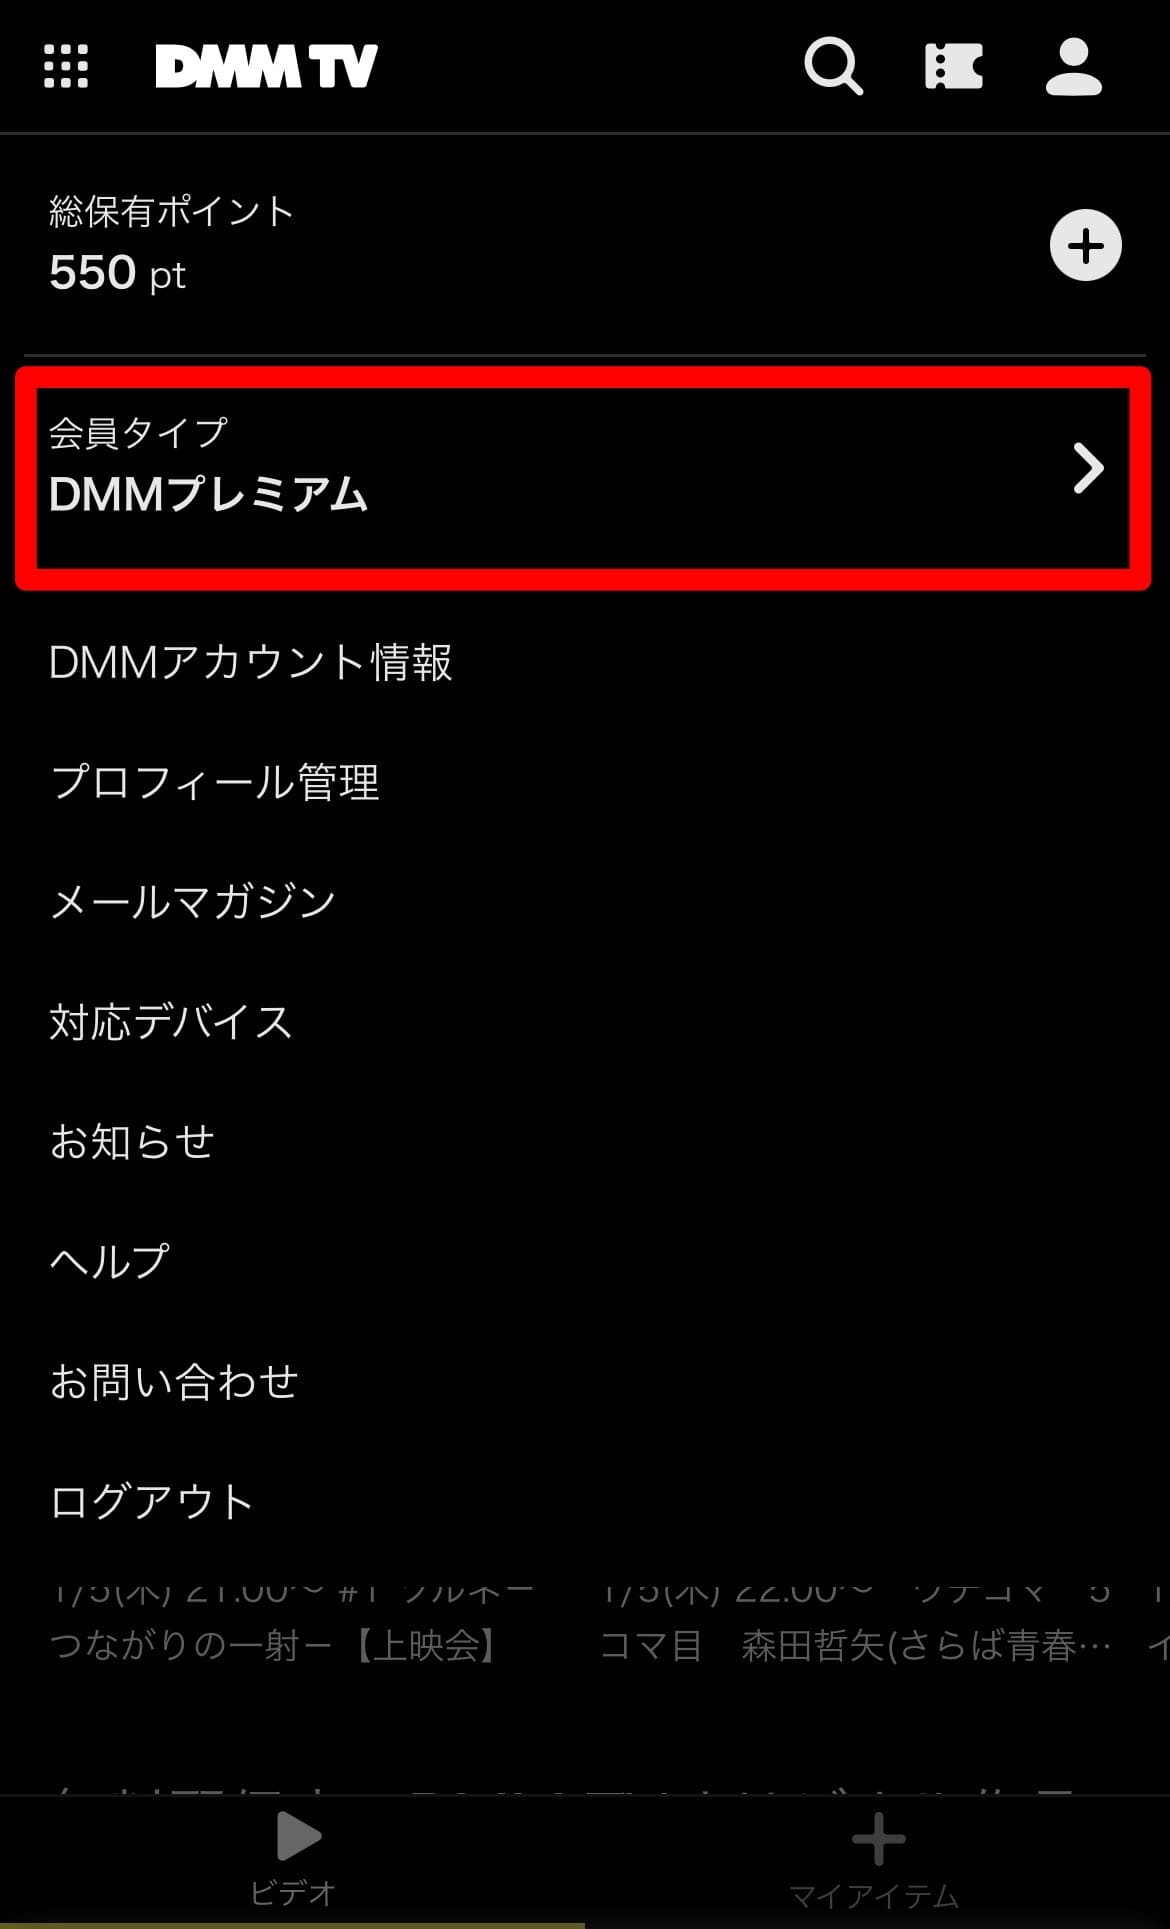 DMMTV 解約手順